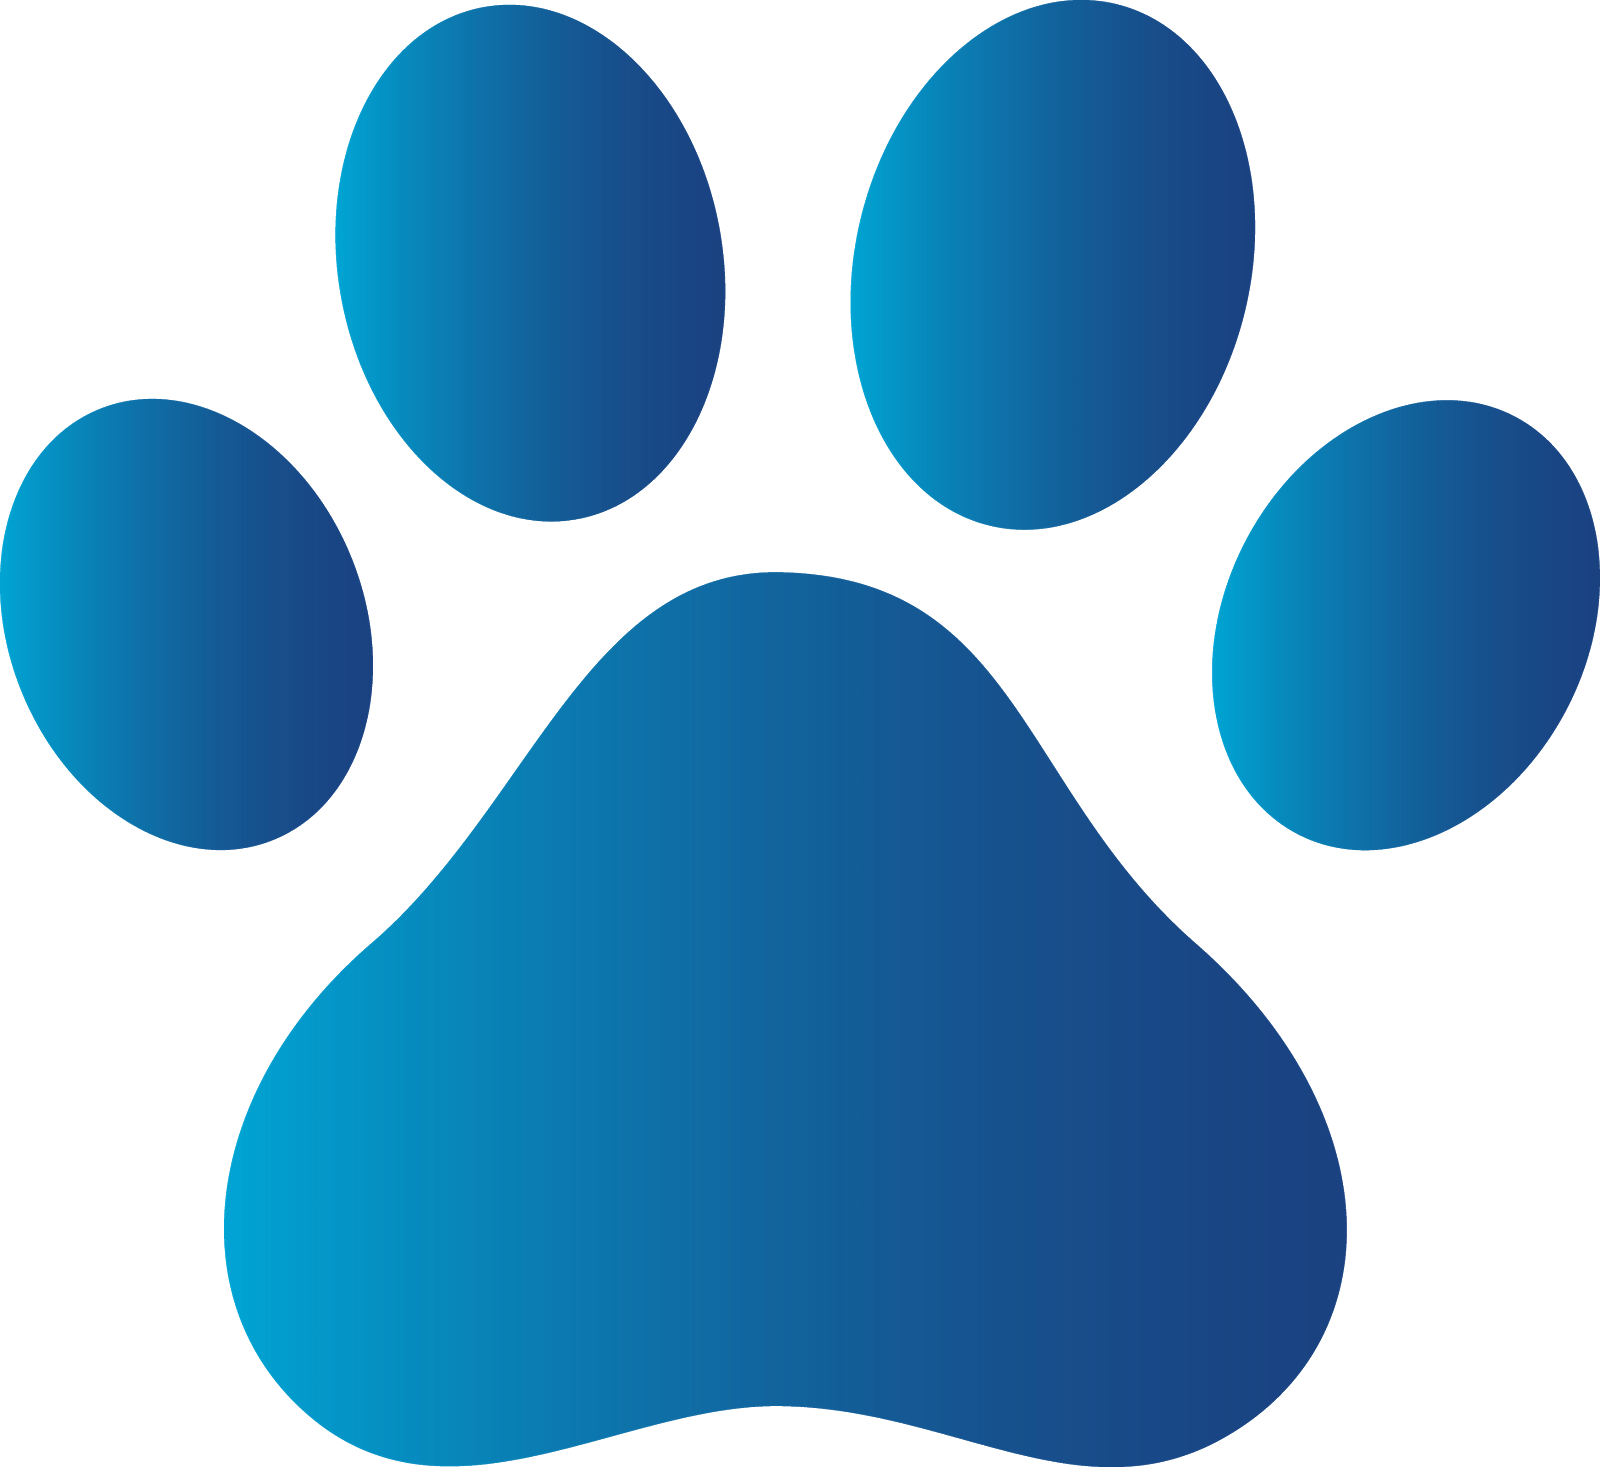 Best Photos of Blue Dog Paw Print - Dog Paw Print Logo, Blue Paw ...